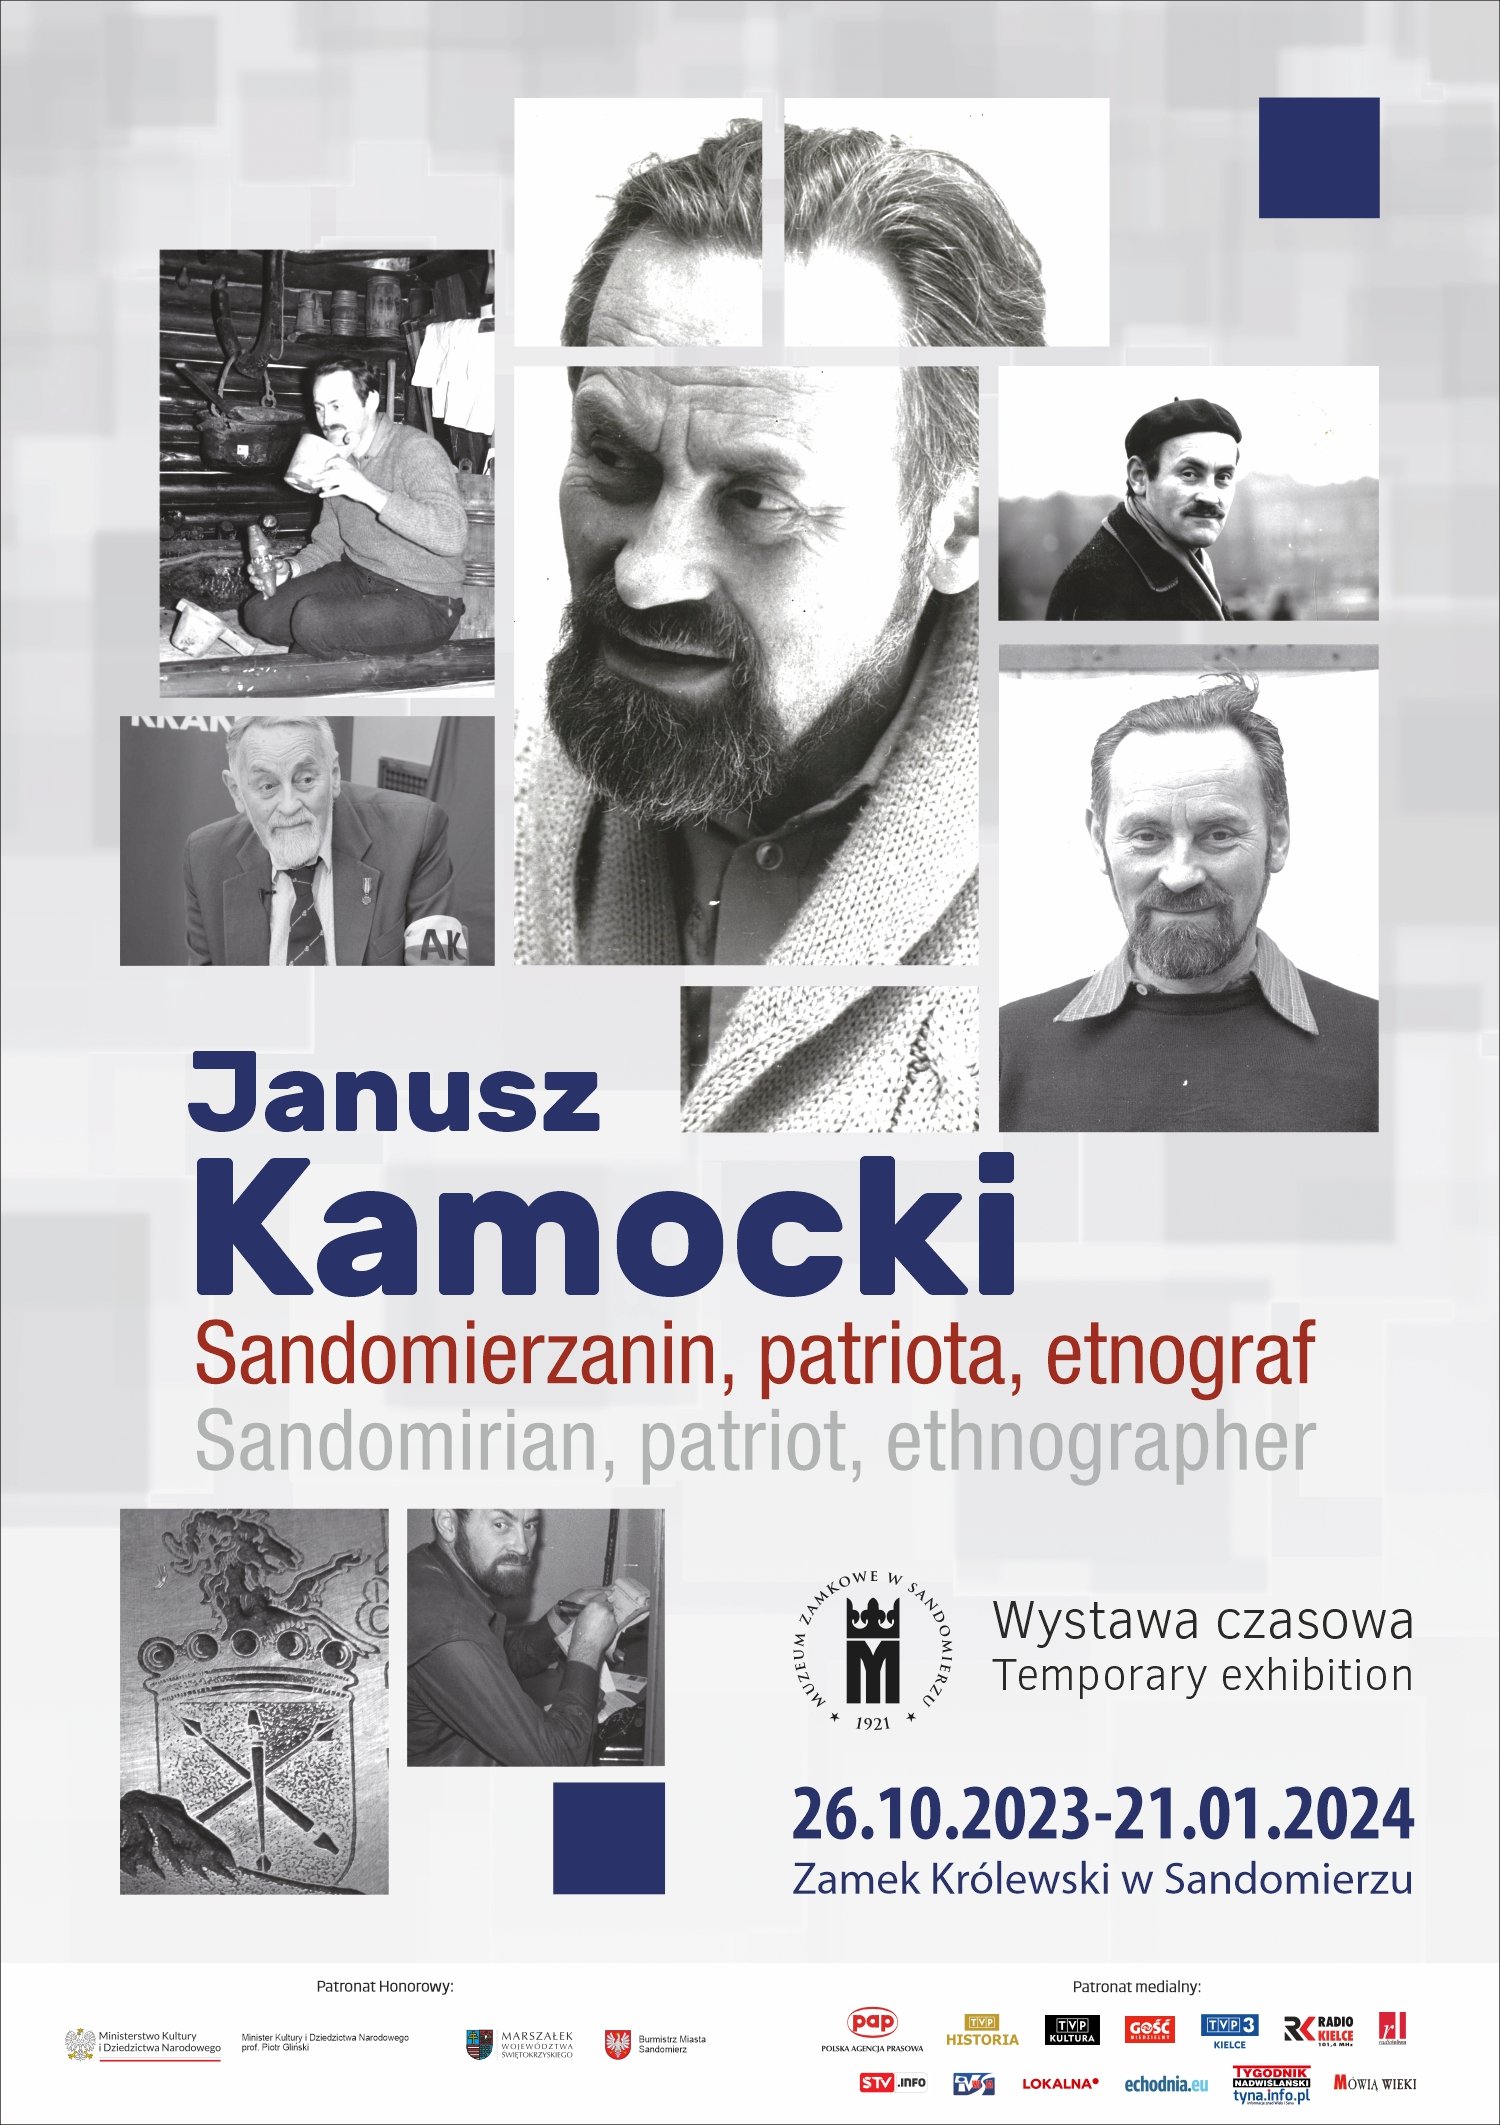 Janusz Kamocki – Sandomierzanin, patriota, etnograf